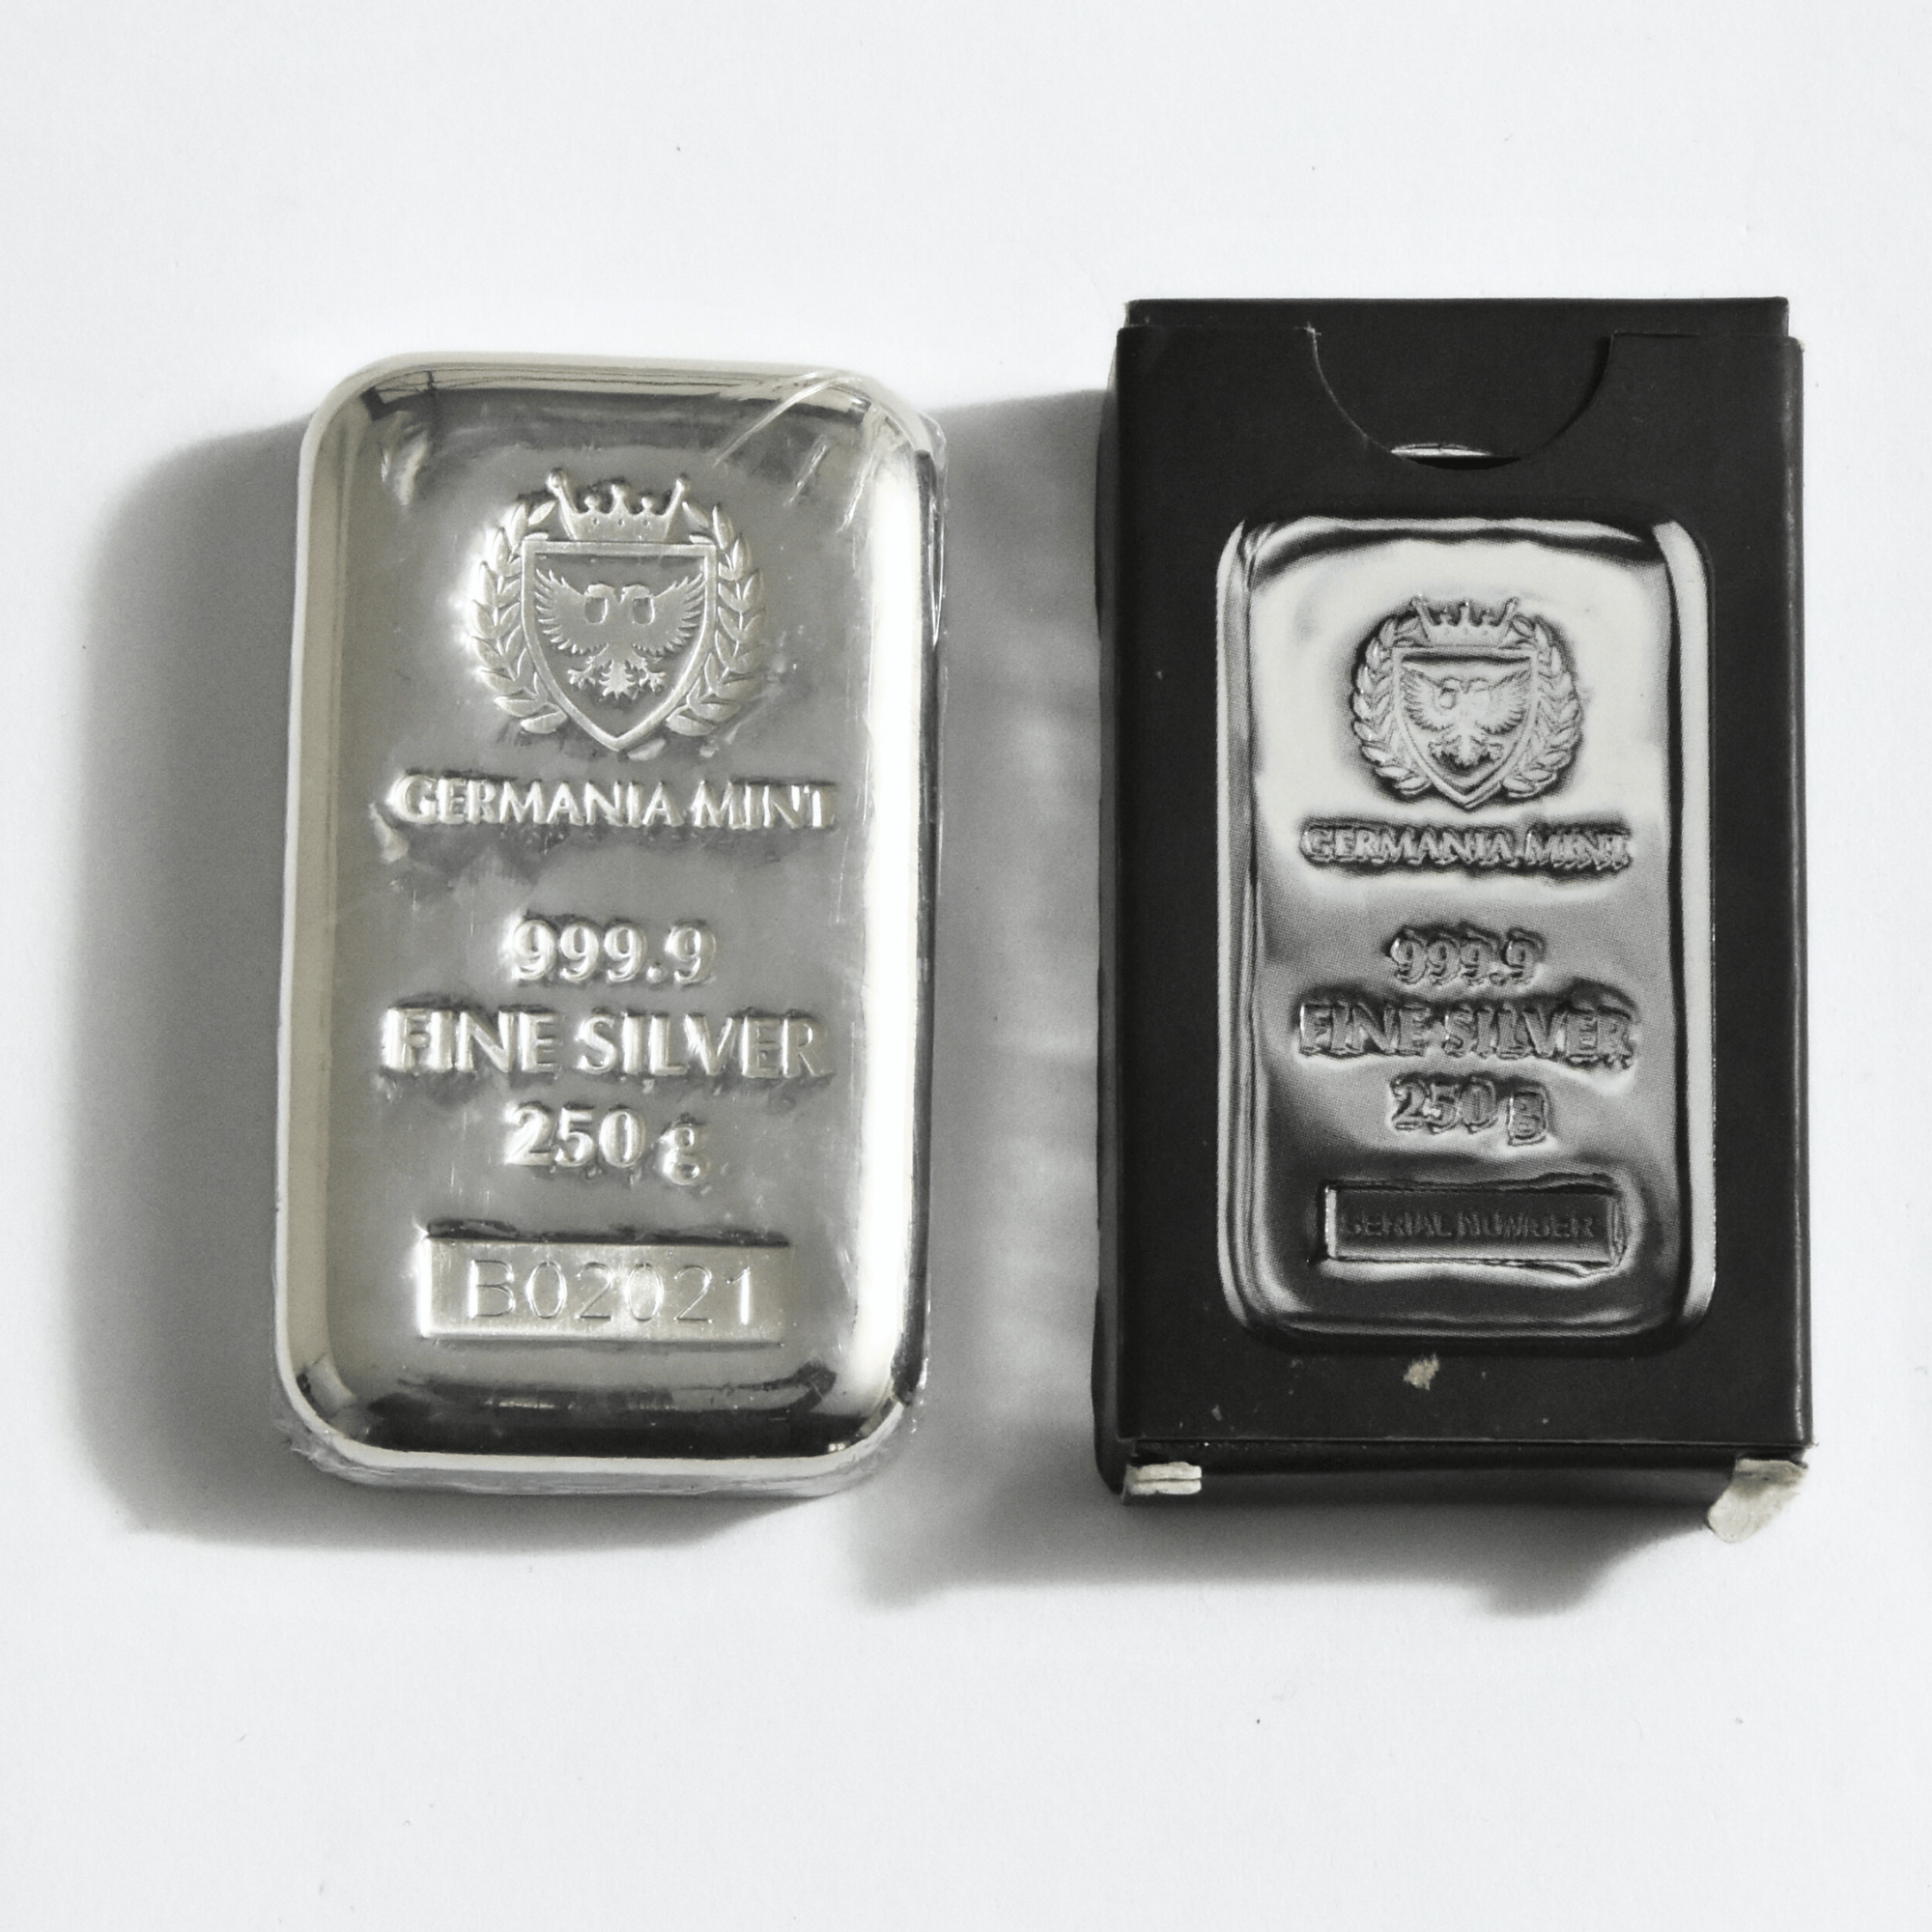 250g Silver bar (Secondary)